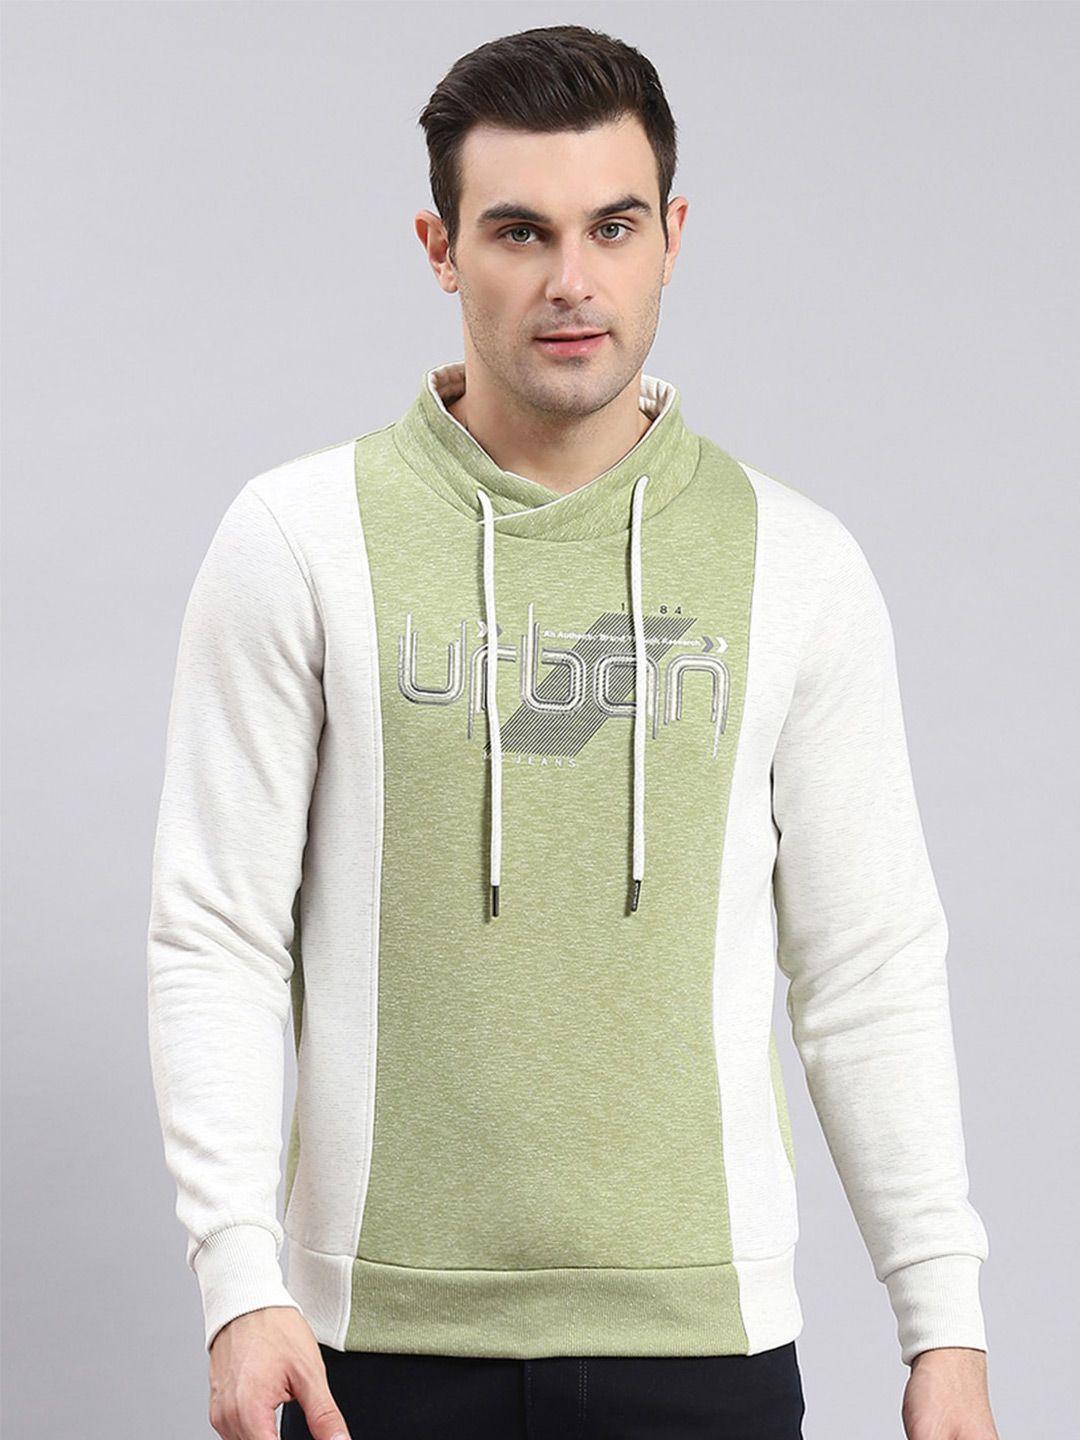 monte-carlo-colourblocked-long-sleeves-pullover